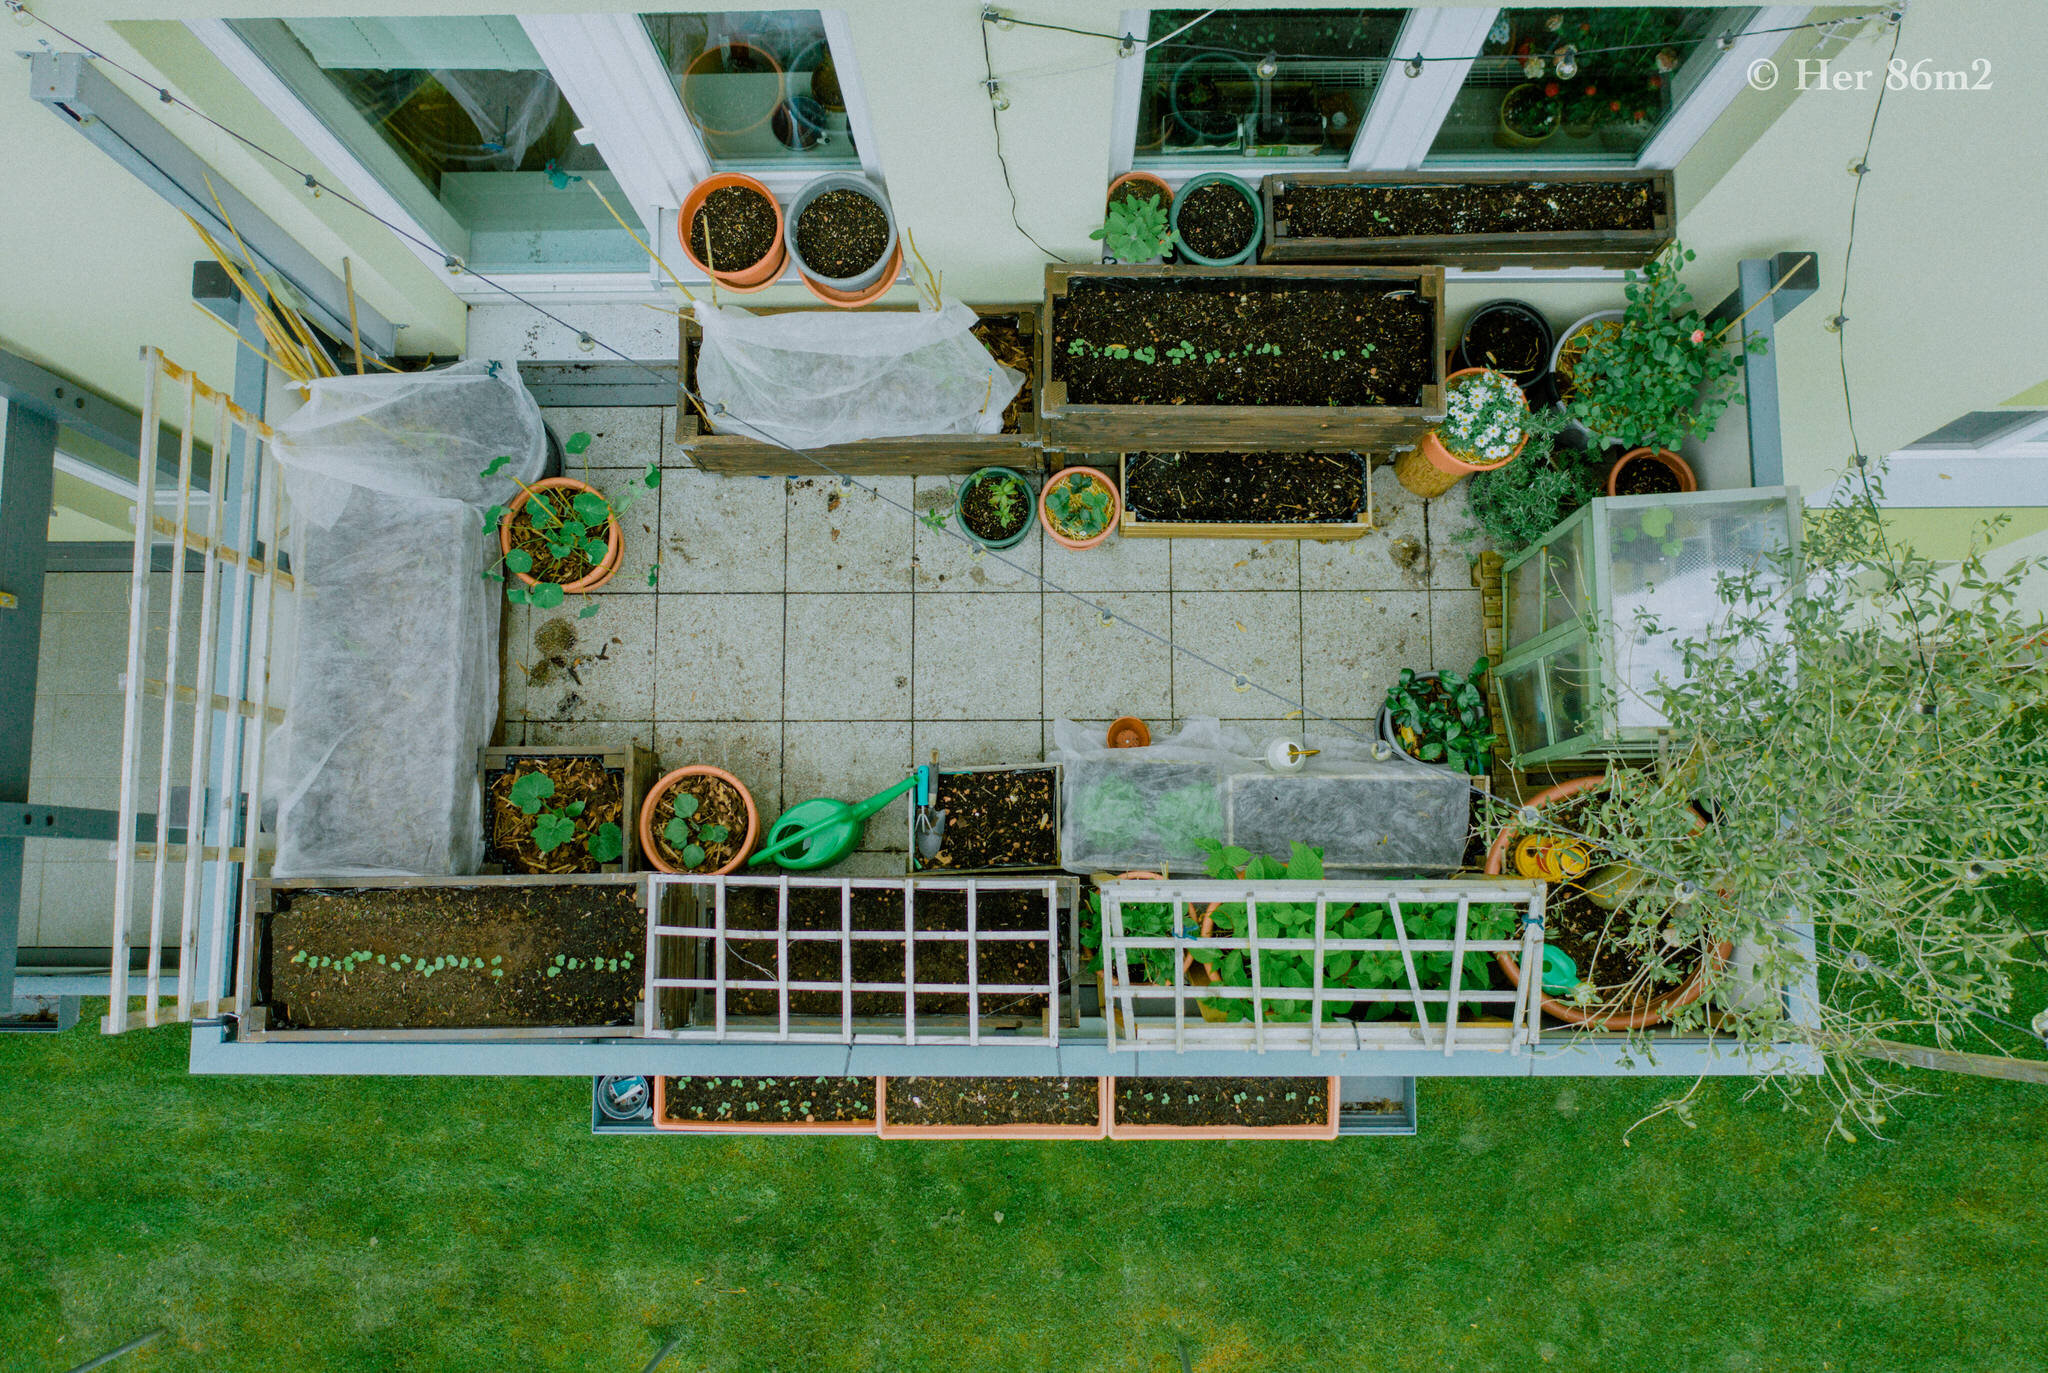 Her 86m2 - My 8m² Balcony Vegetable Garden | A Wonderful 200 Day Journey 19a.jpg